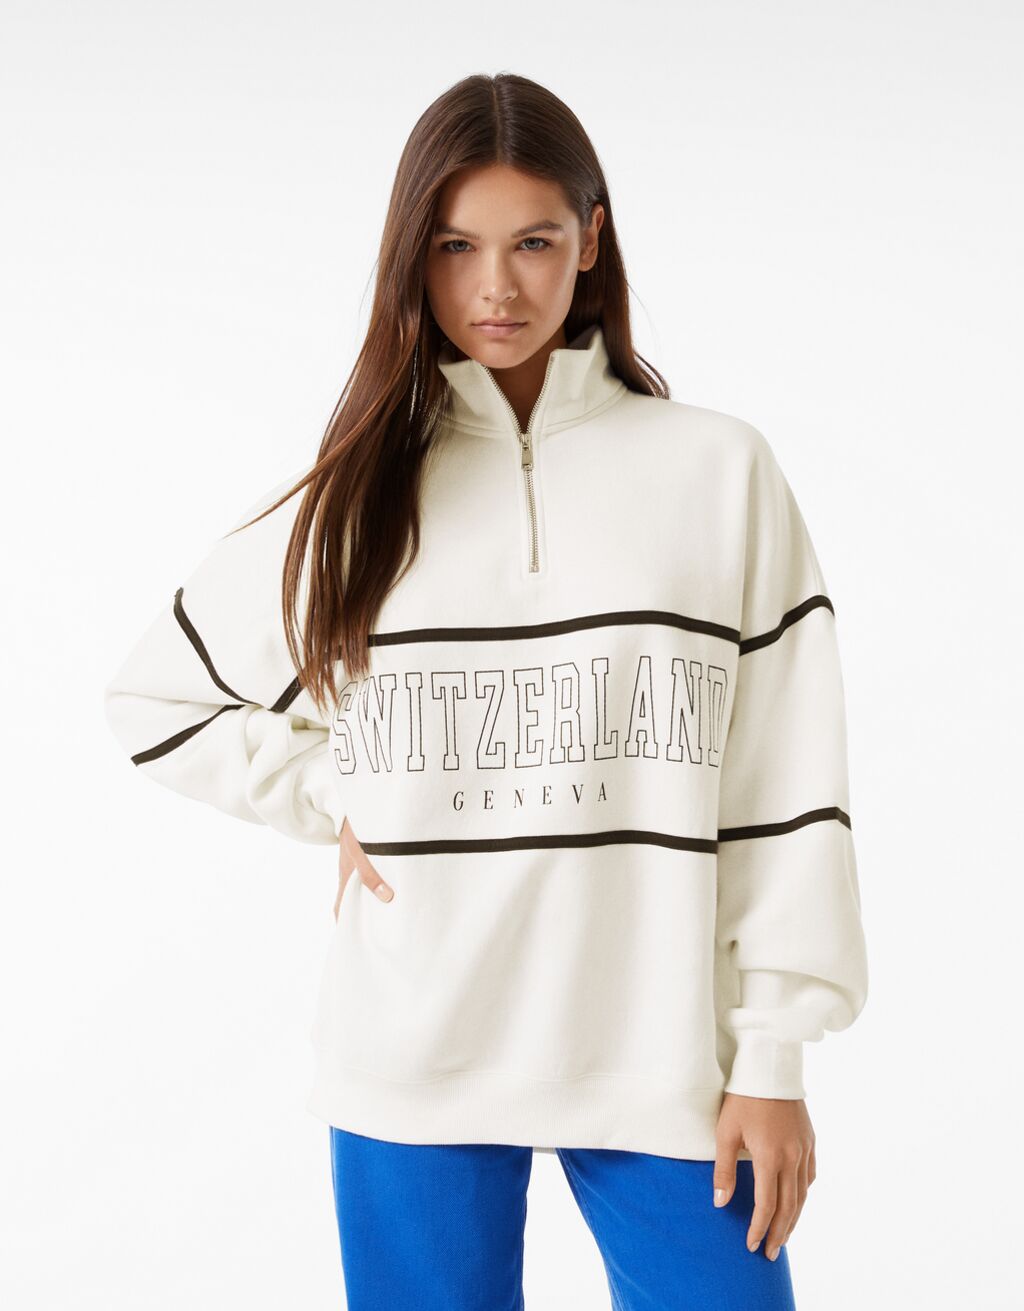 Højhalset sweatshirt med lynlås og print